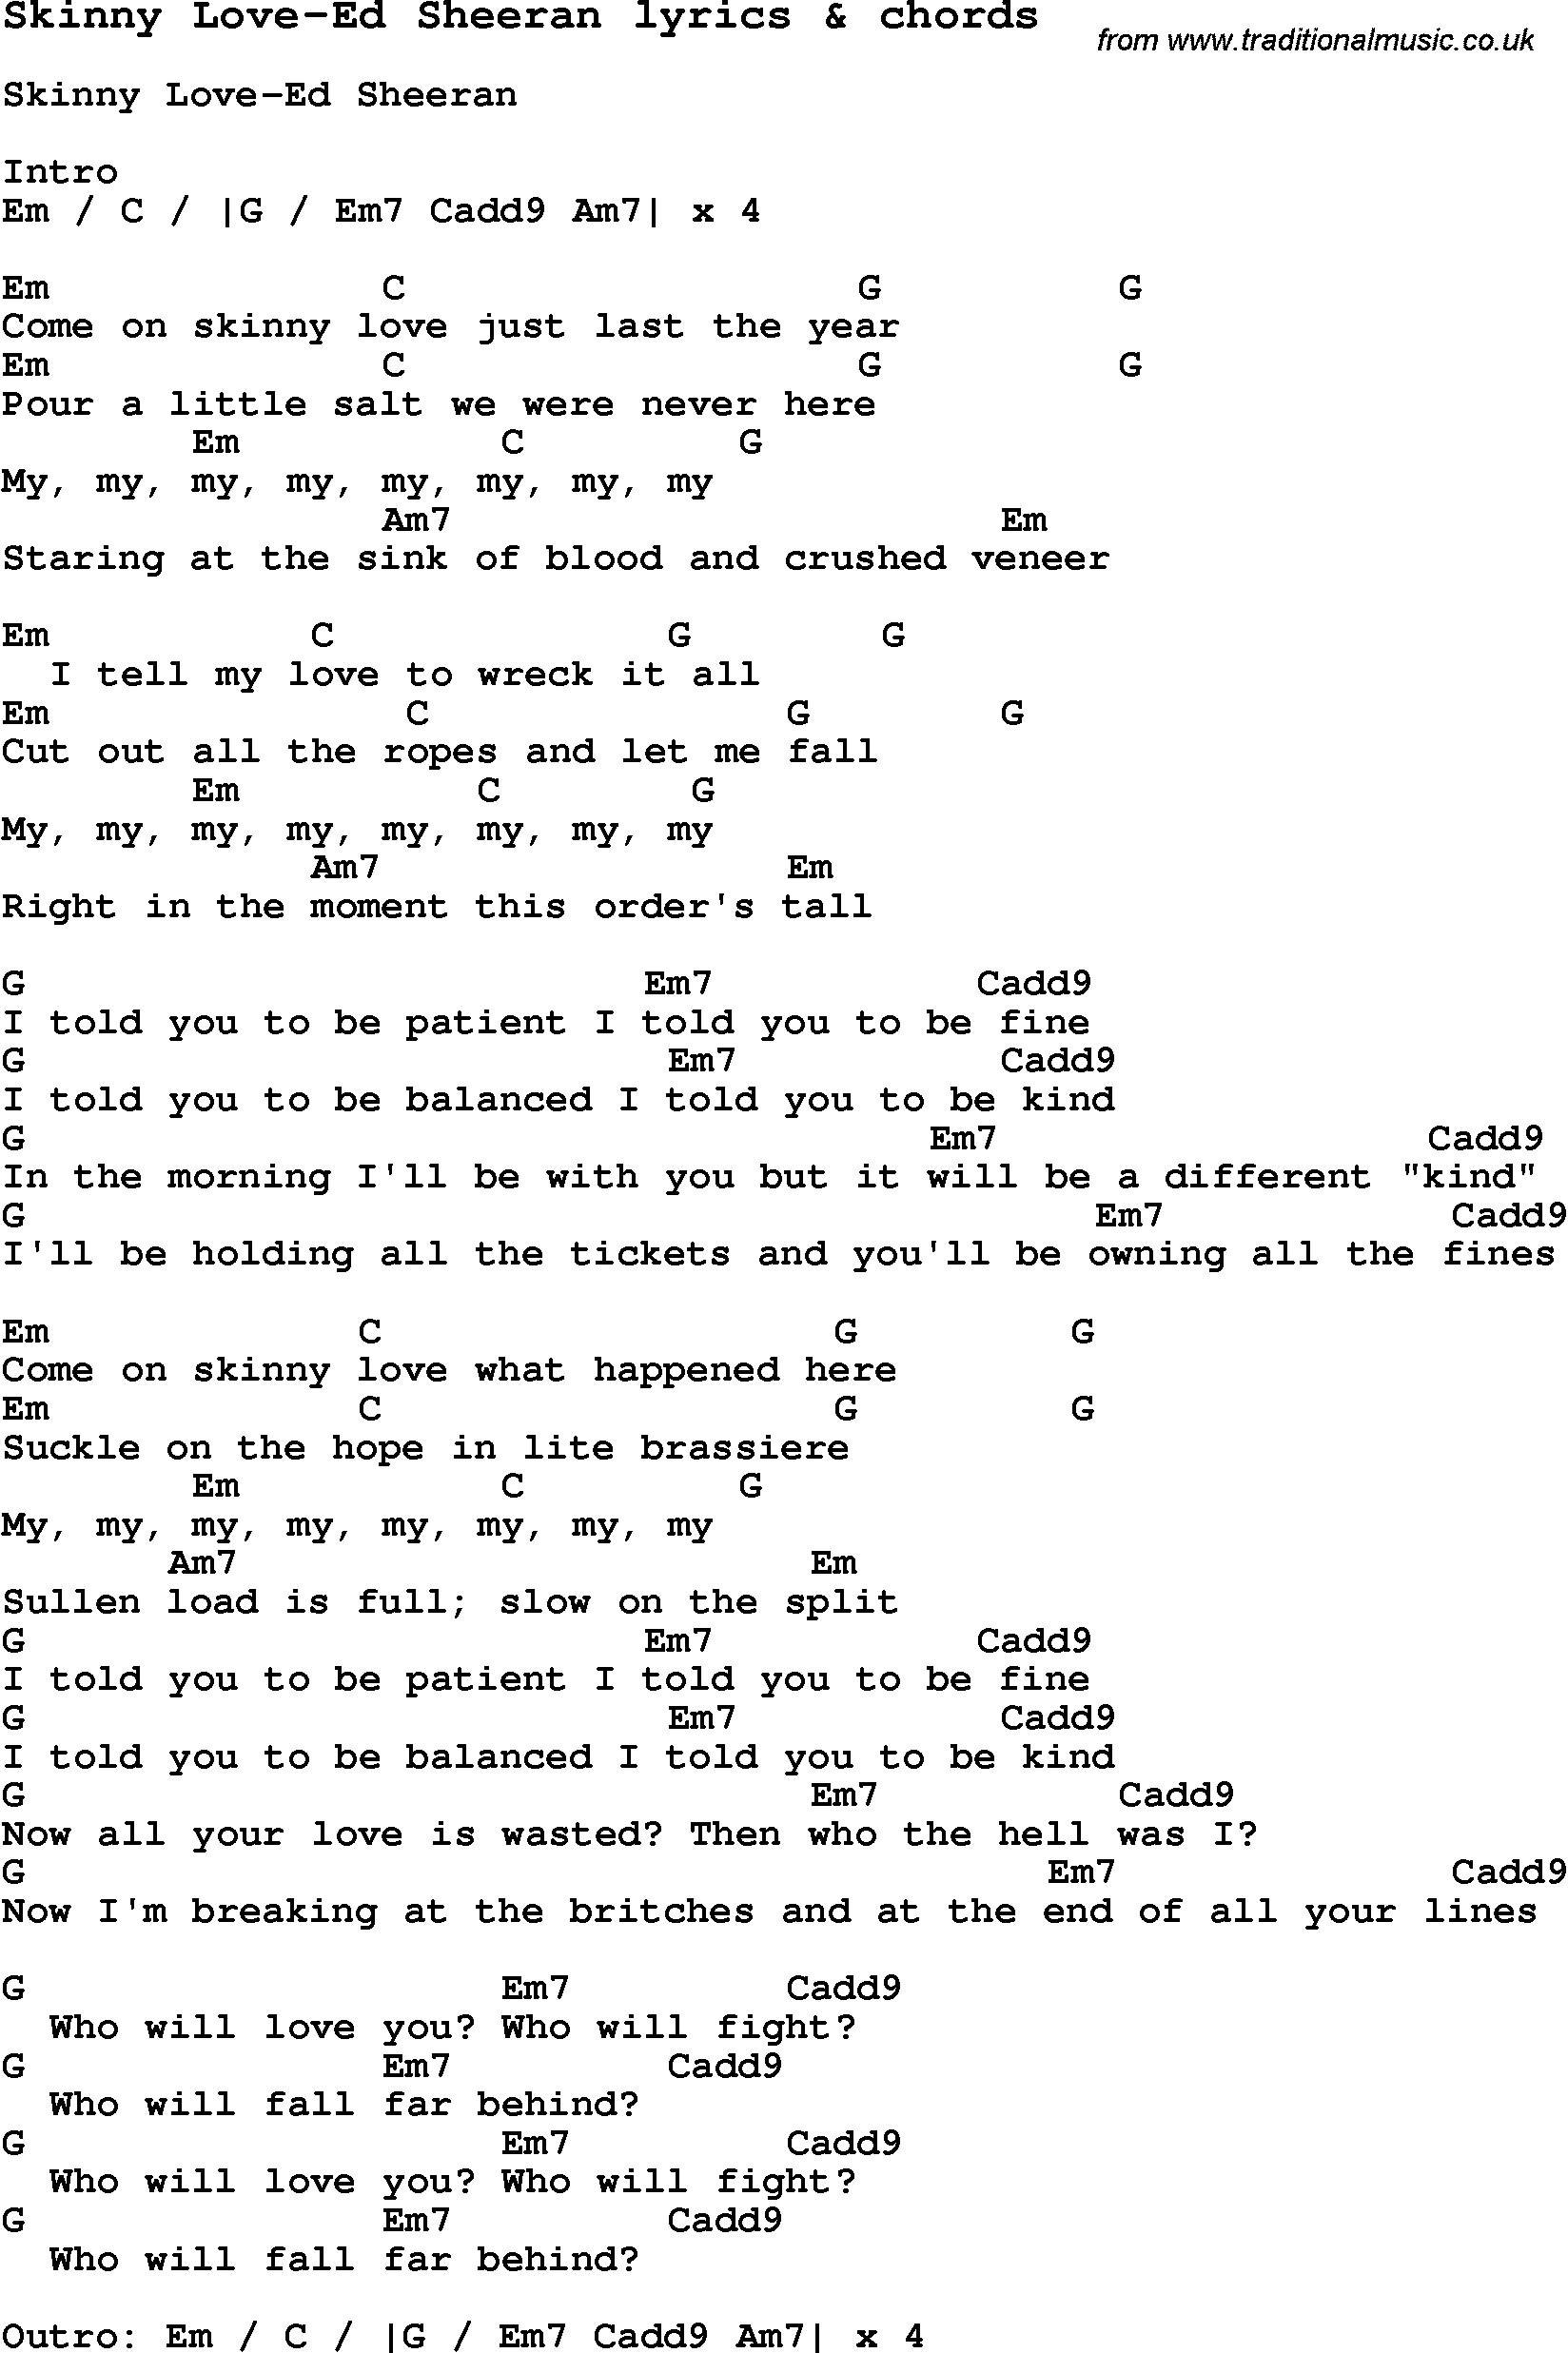 1648x2473 Love Song Lyrics for: Skinny Love-Ed Sheeran with chords for Ukulele, Guitar